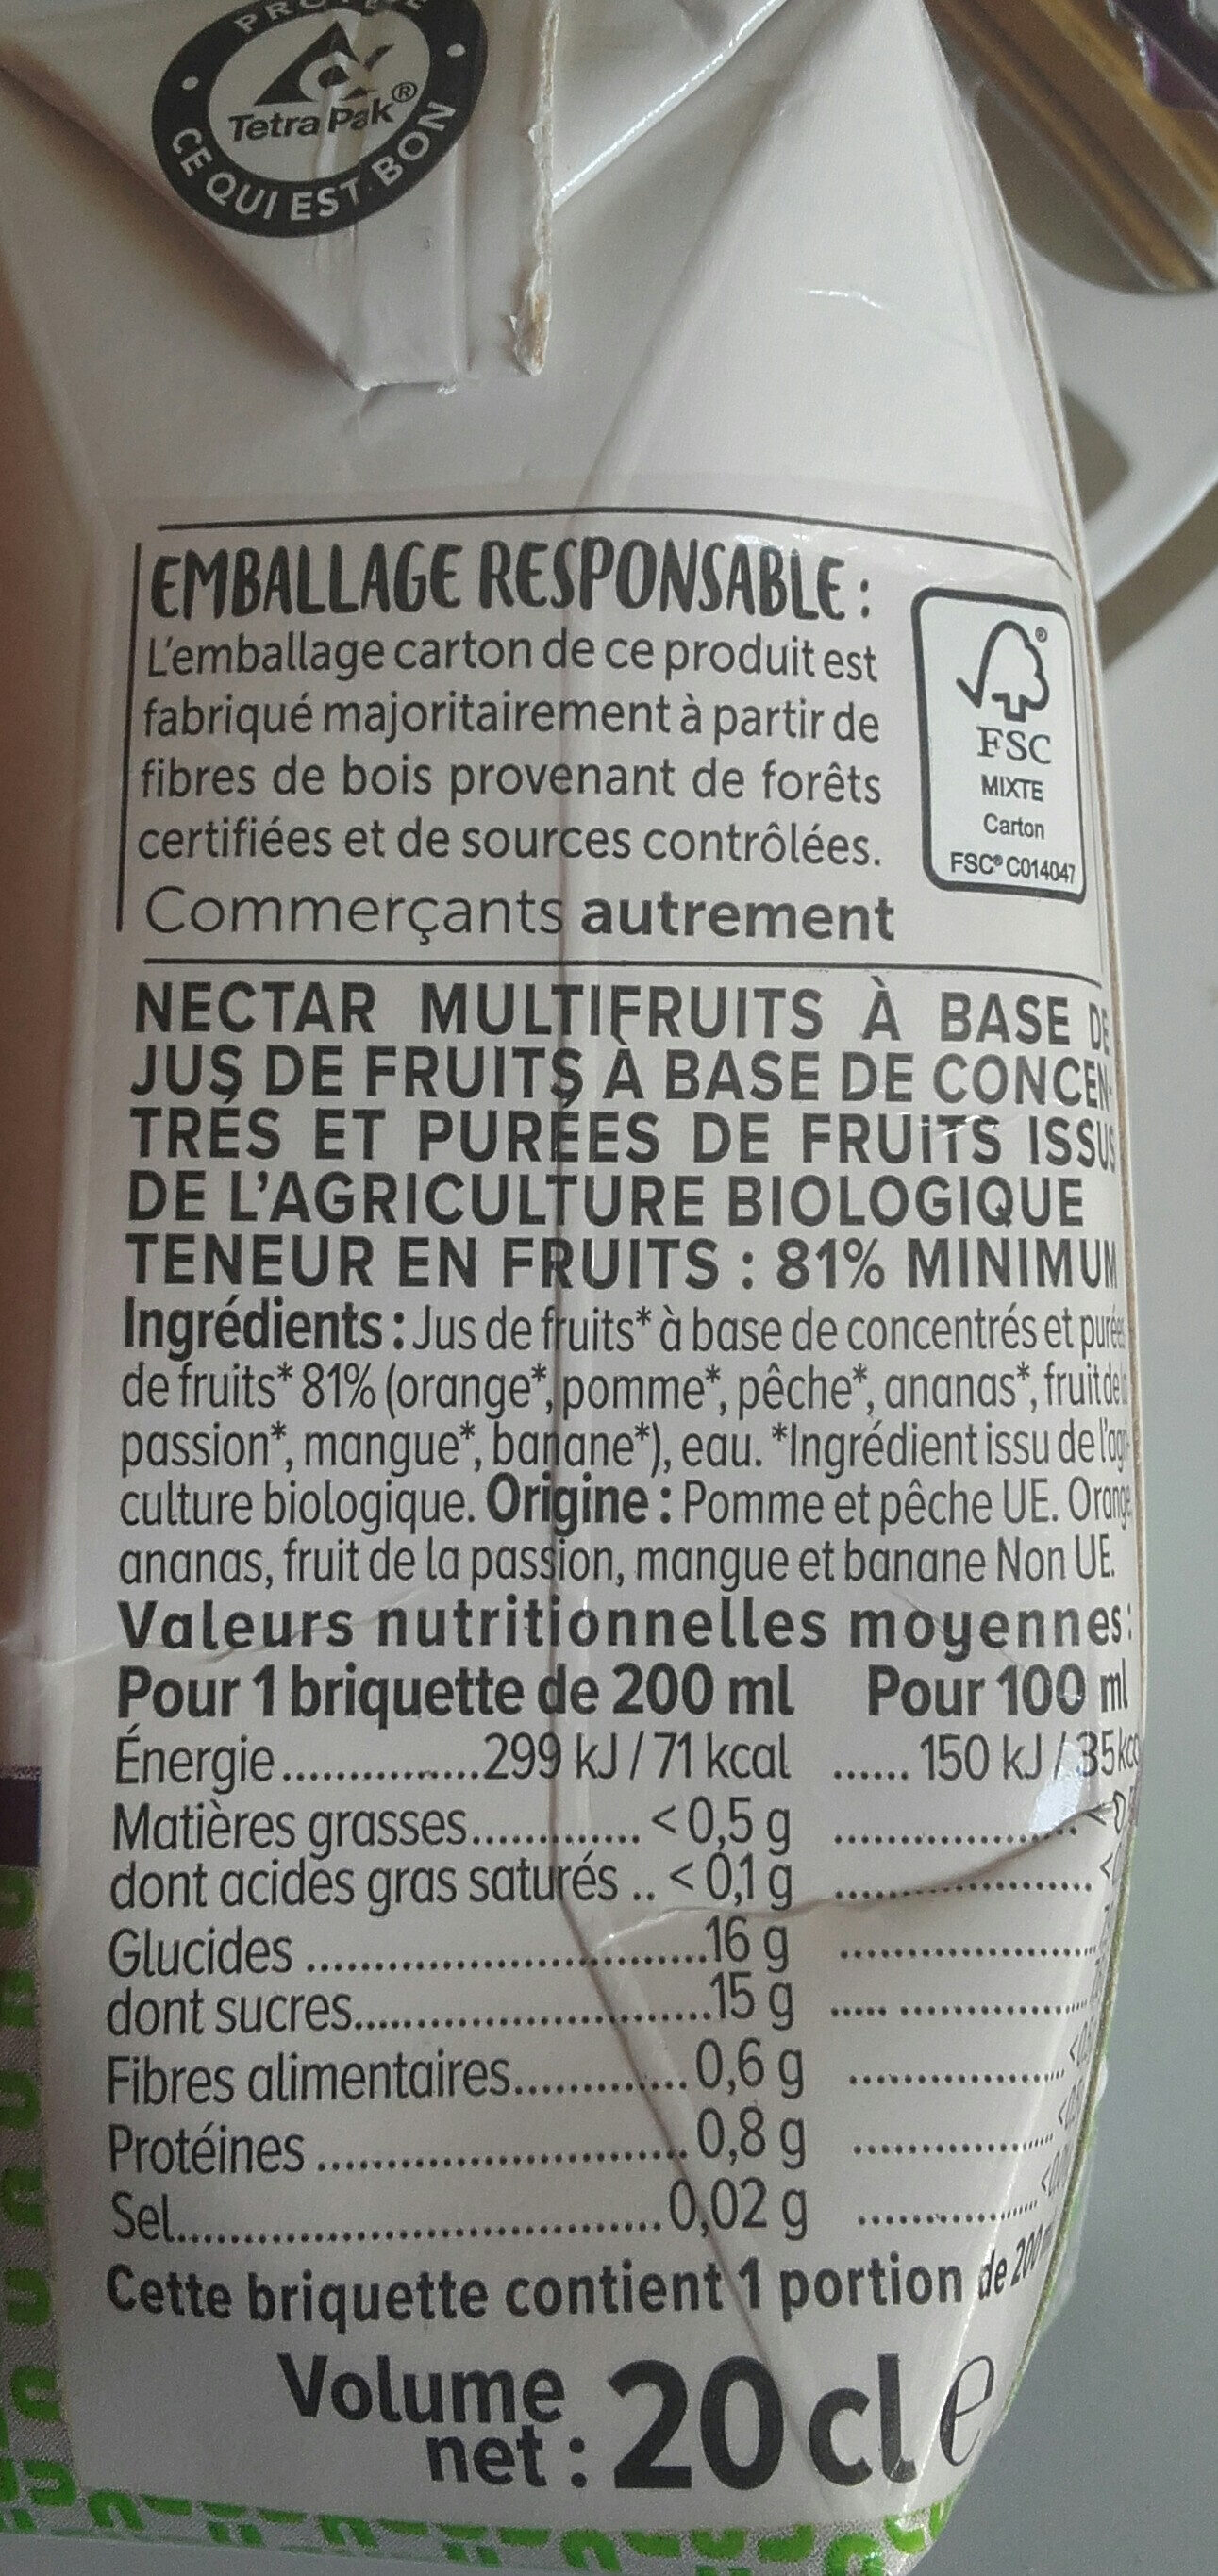 Nectar multifruits - Ingredients - fr